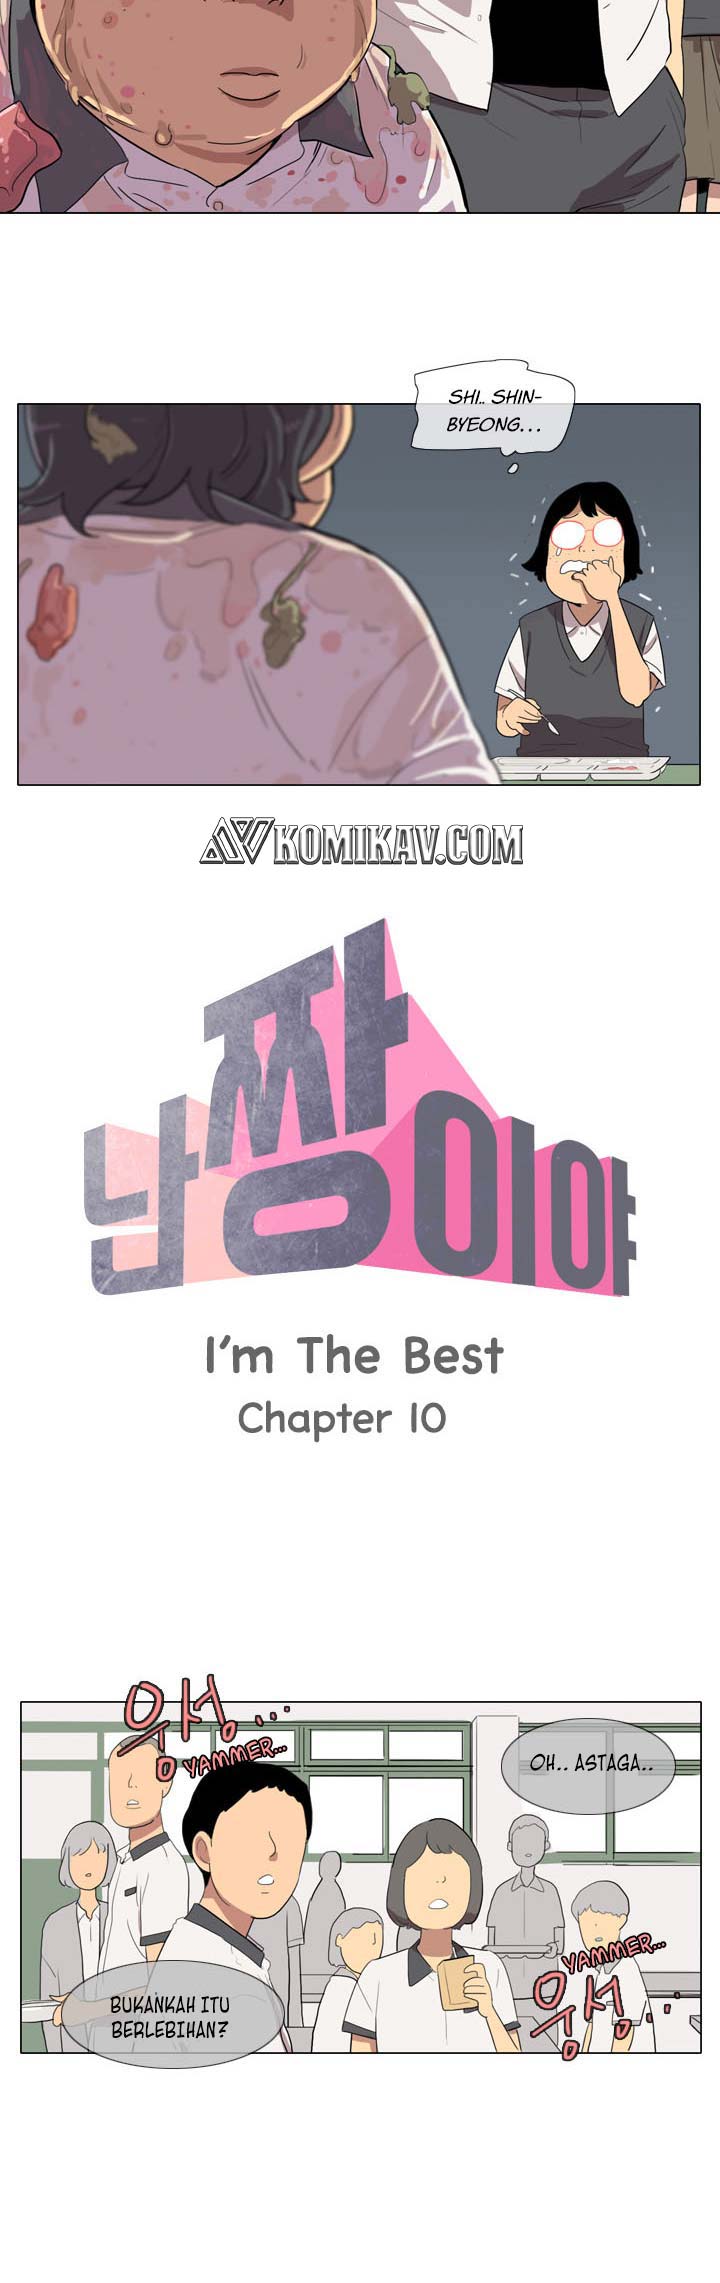 I’m da best Chapter 10